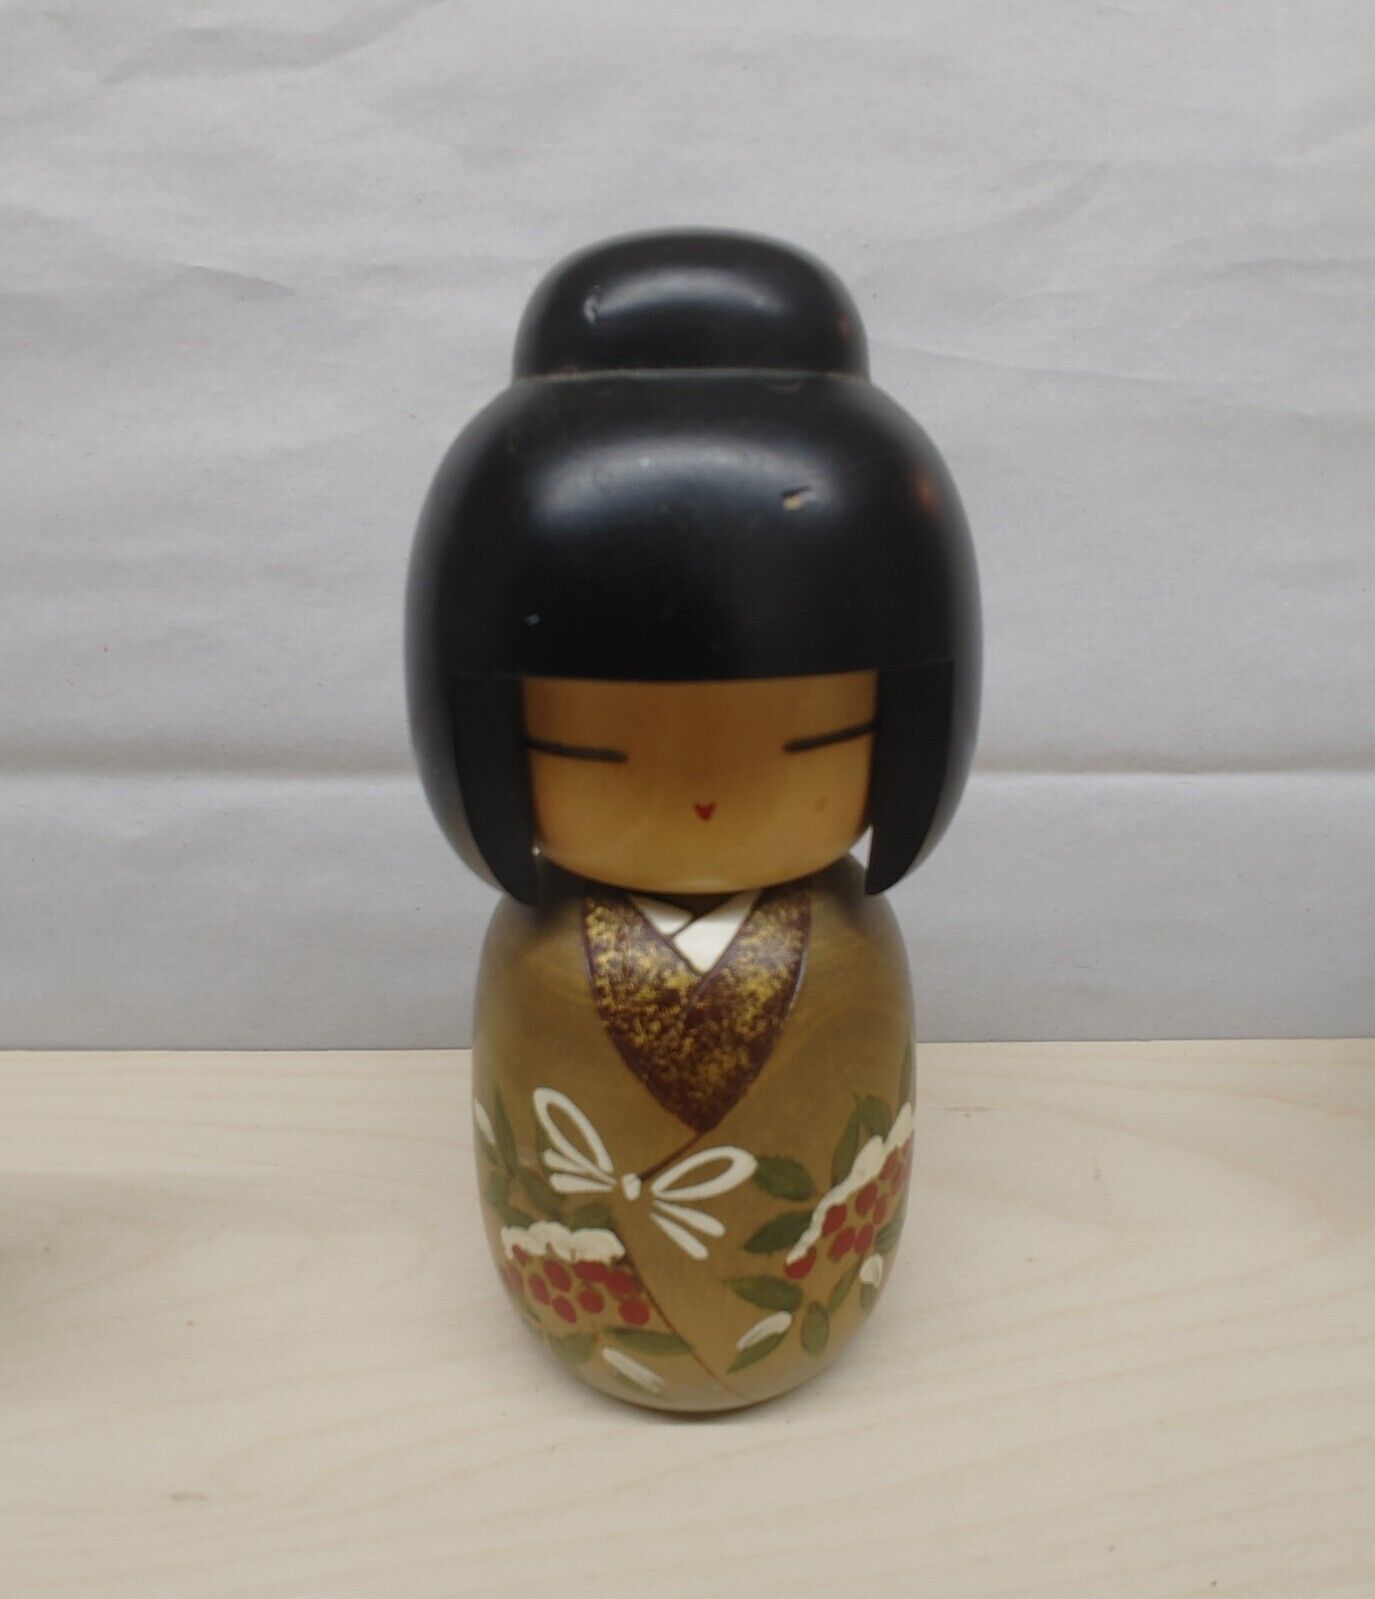 Japanese Kokeshi Wooden Doll Hand Painted Leaves 6” Vintage Pls Read Description